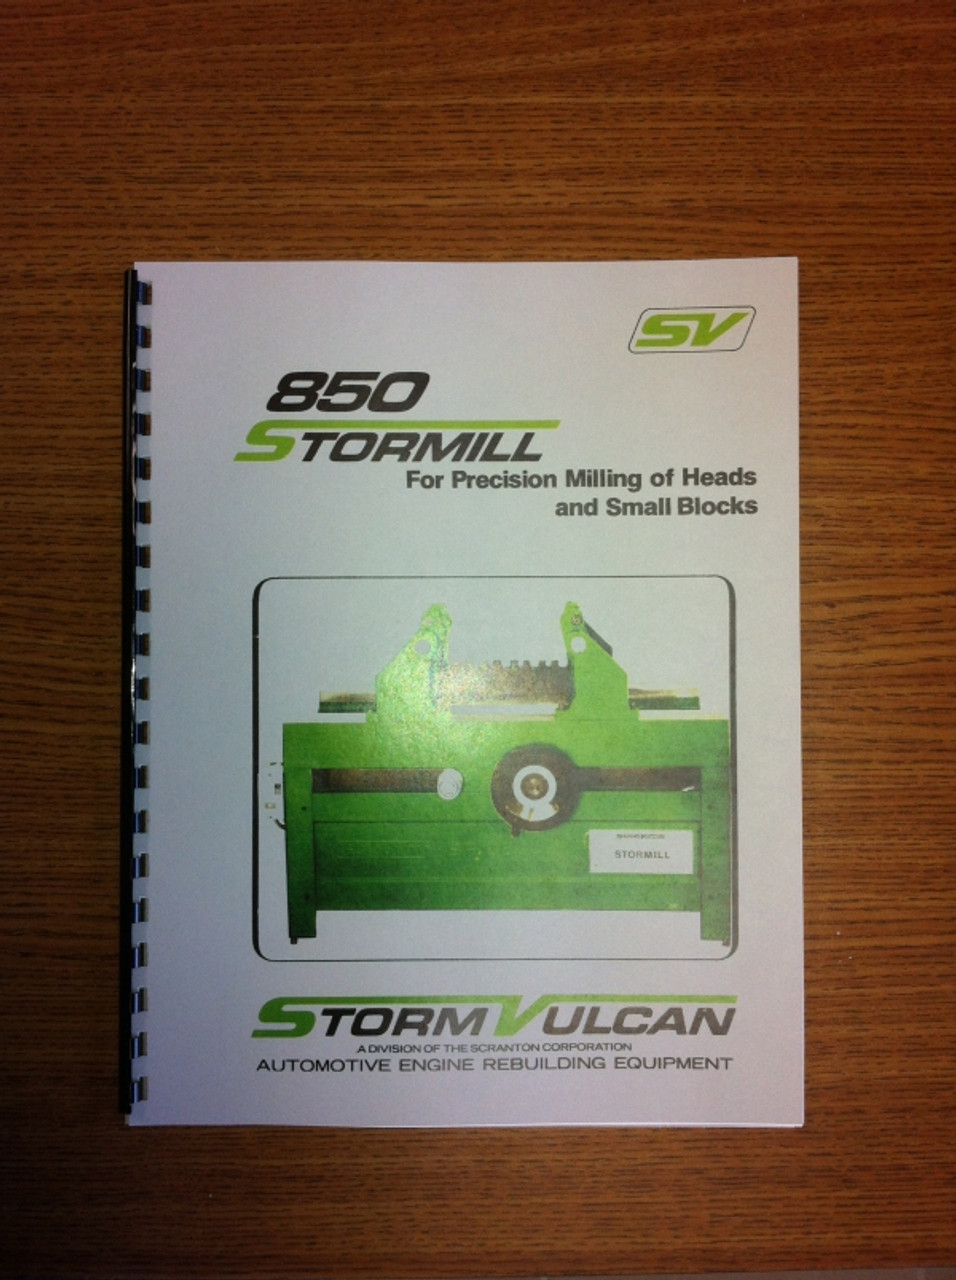 Storm Vulcan Model 850 Manual